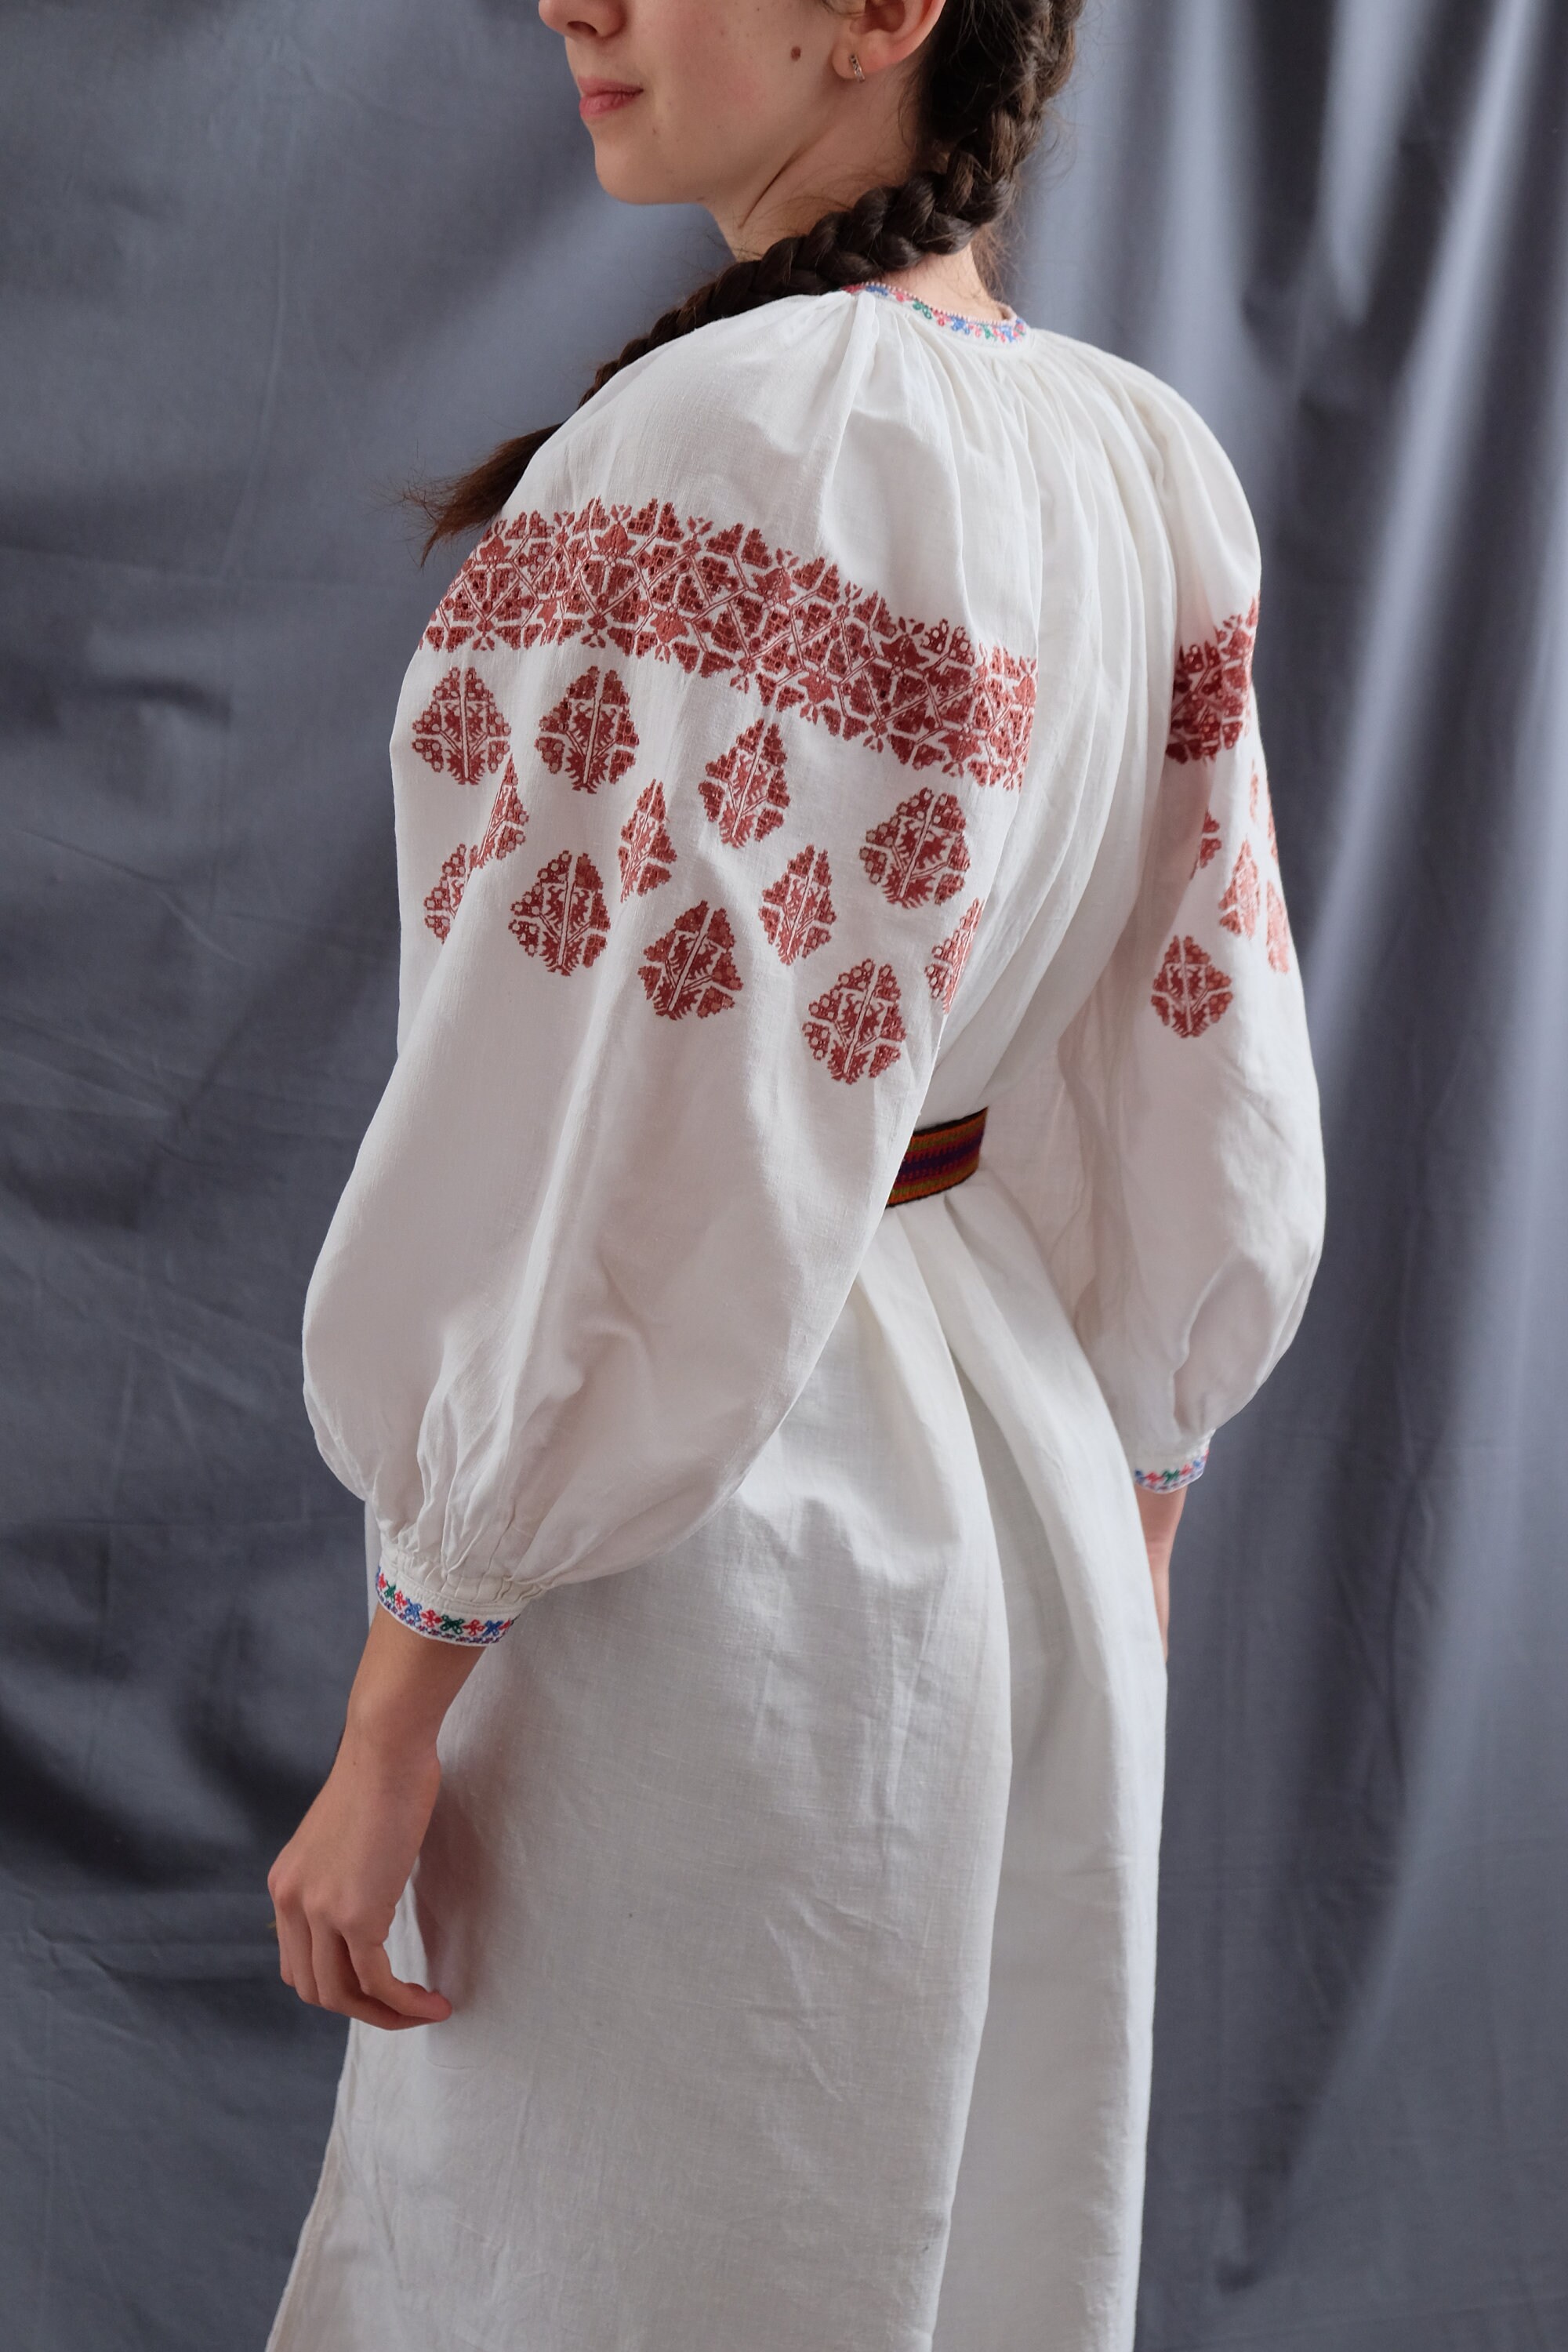 NATURAL DYE embroidery Oak embroidery Linen dress Original | Etsy